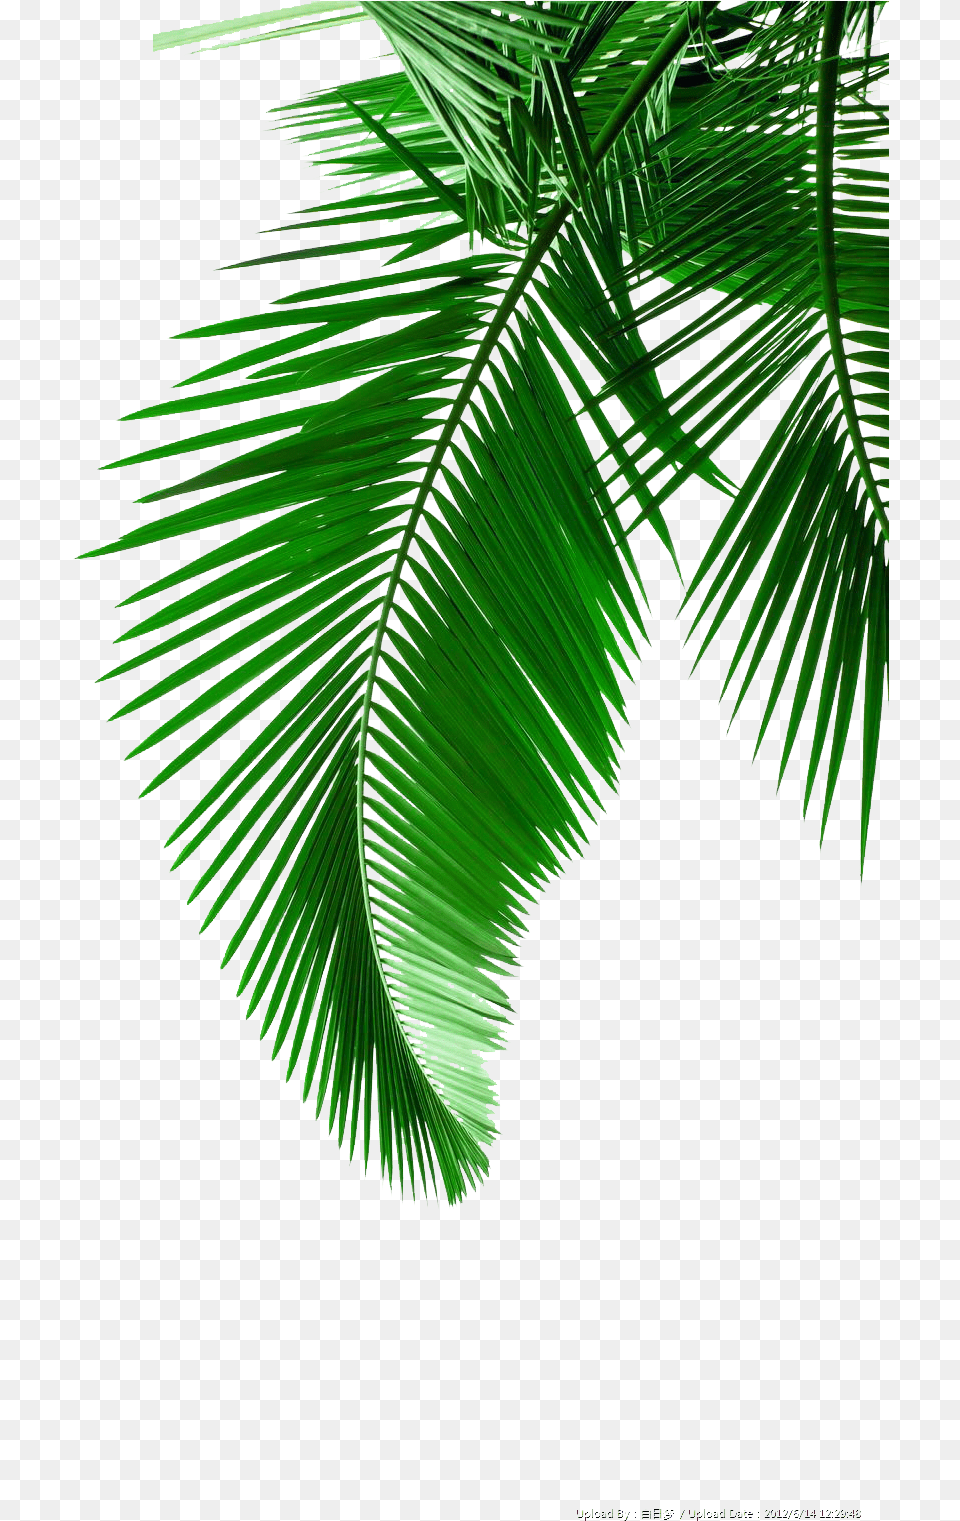 Picture Leaf Leaves Material Arecaceae Palm Green Clipart Transparent Coconut Leaf, Palm Tree, Tree, Plant, Vegetation Png